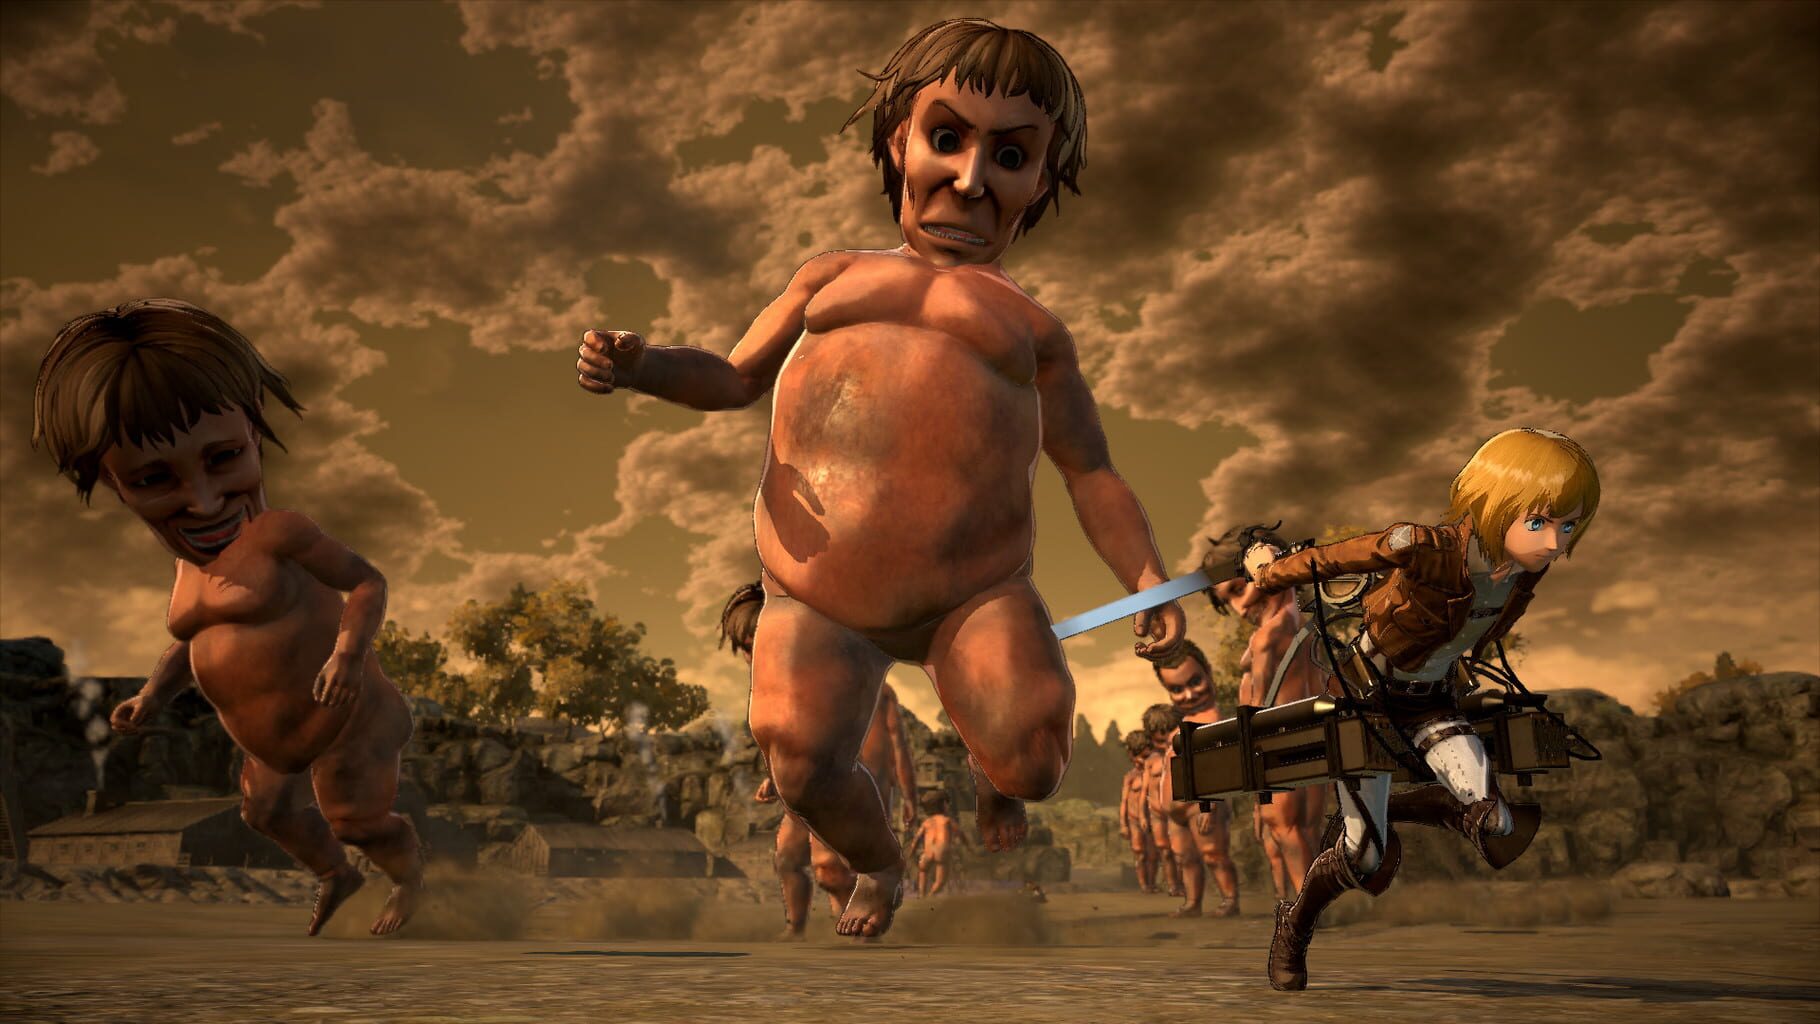 Attack on Titan 2: A Cornered Rat screenshot